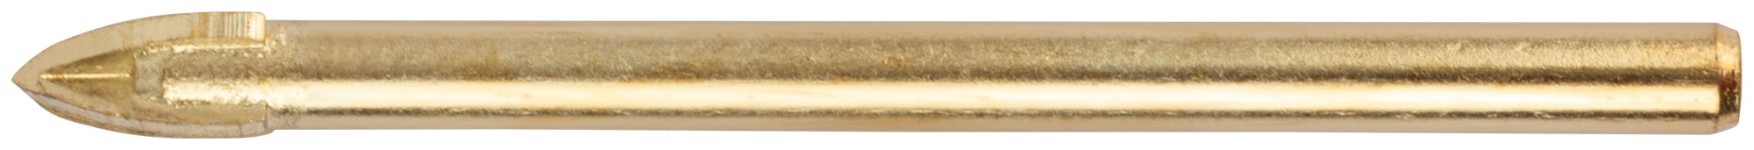 Сверло по кафелю и стеклу, 4 режущие кромки, титановое покрытие  6х60 мм